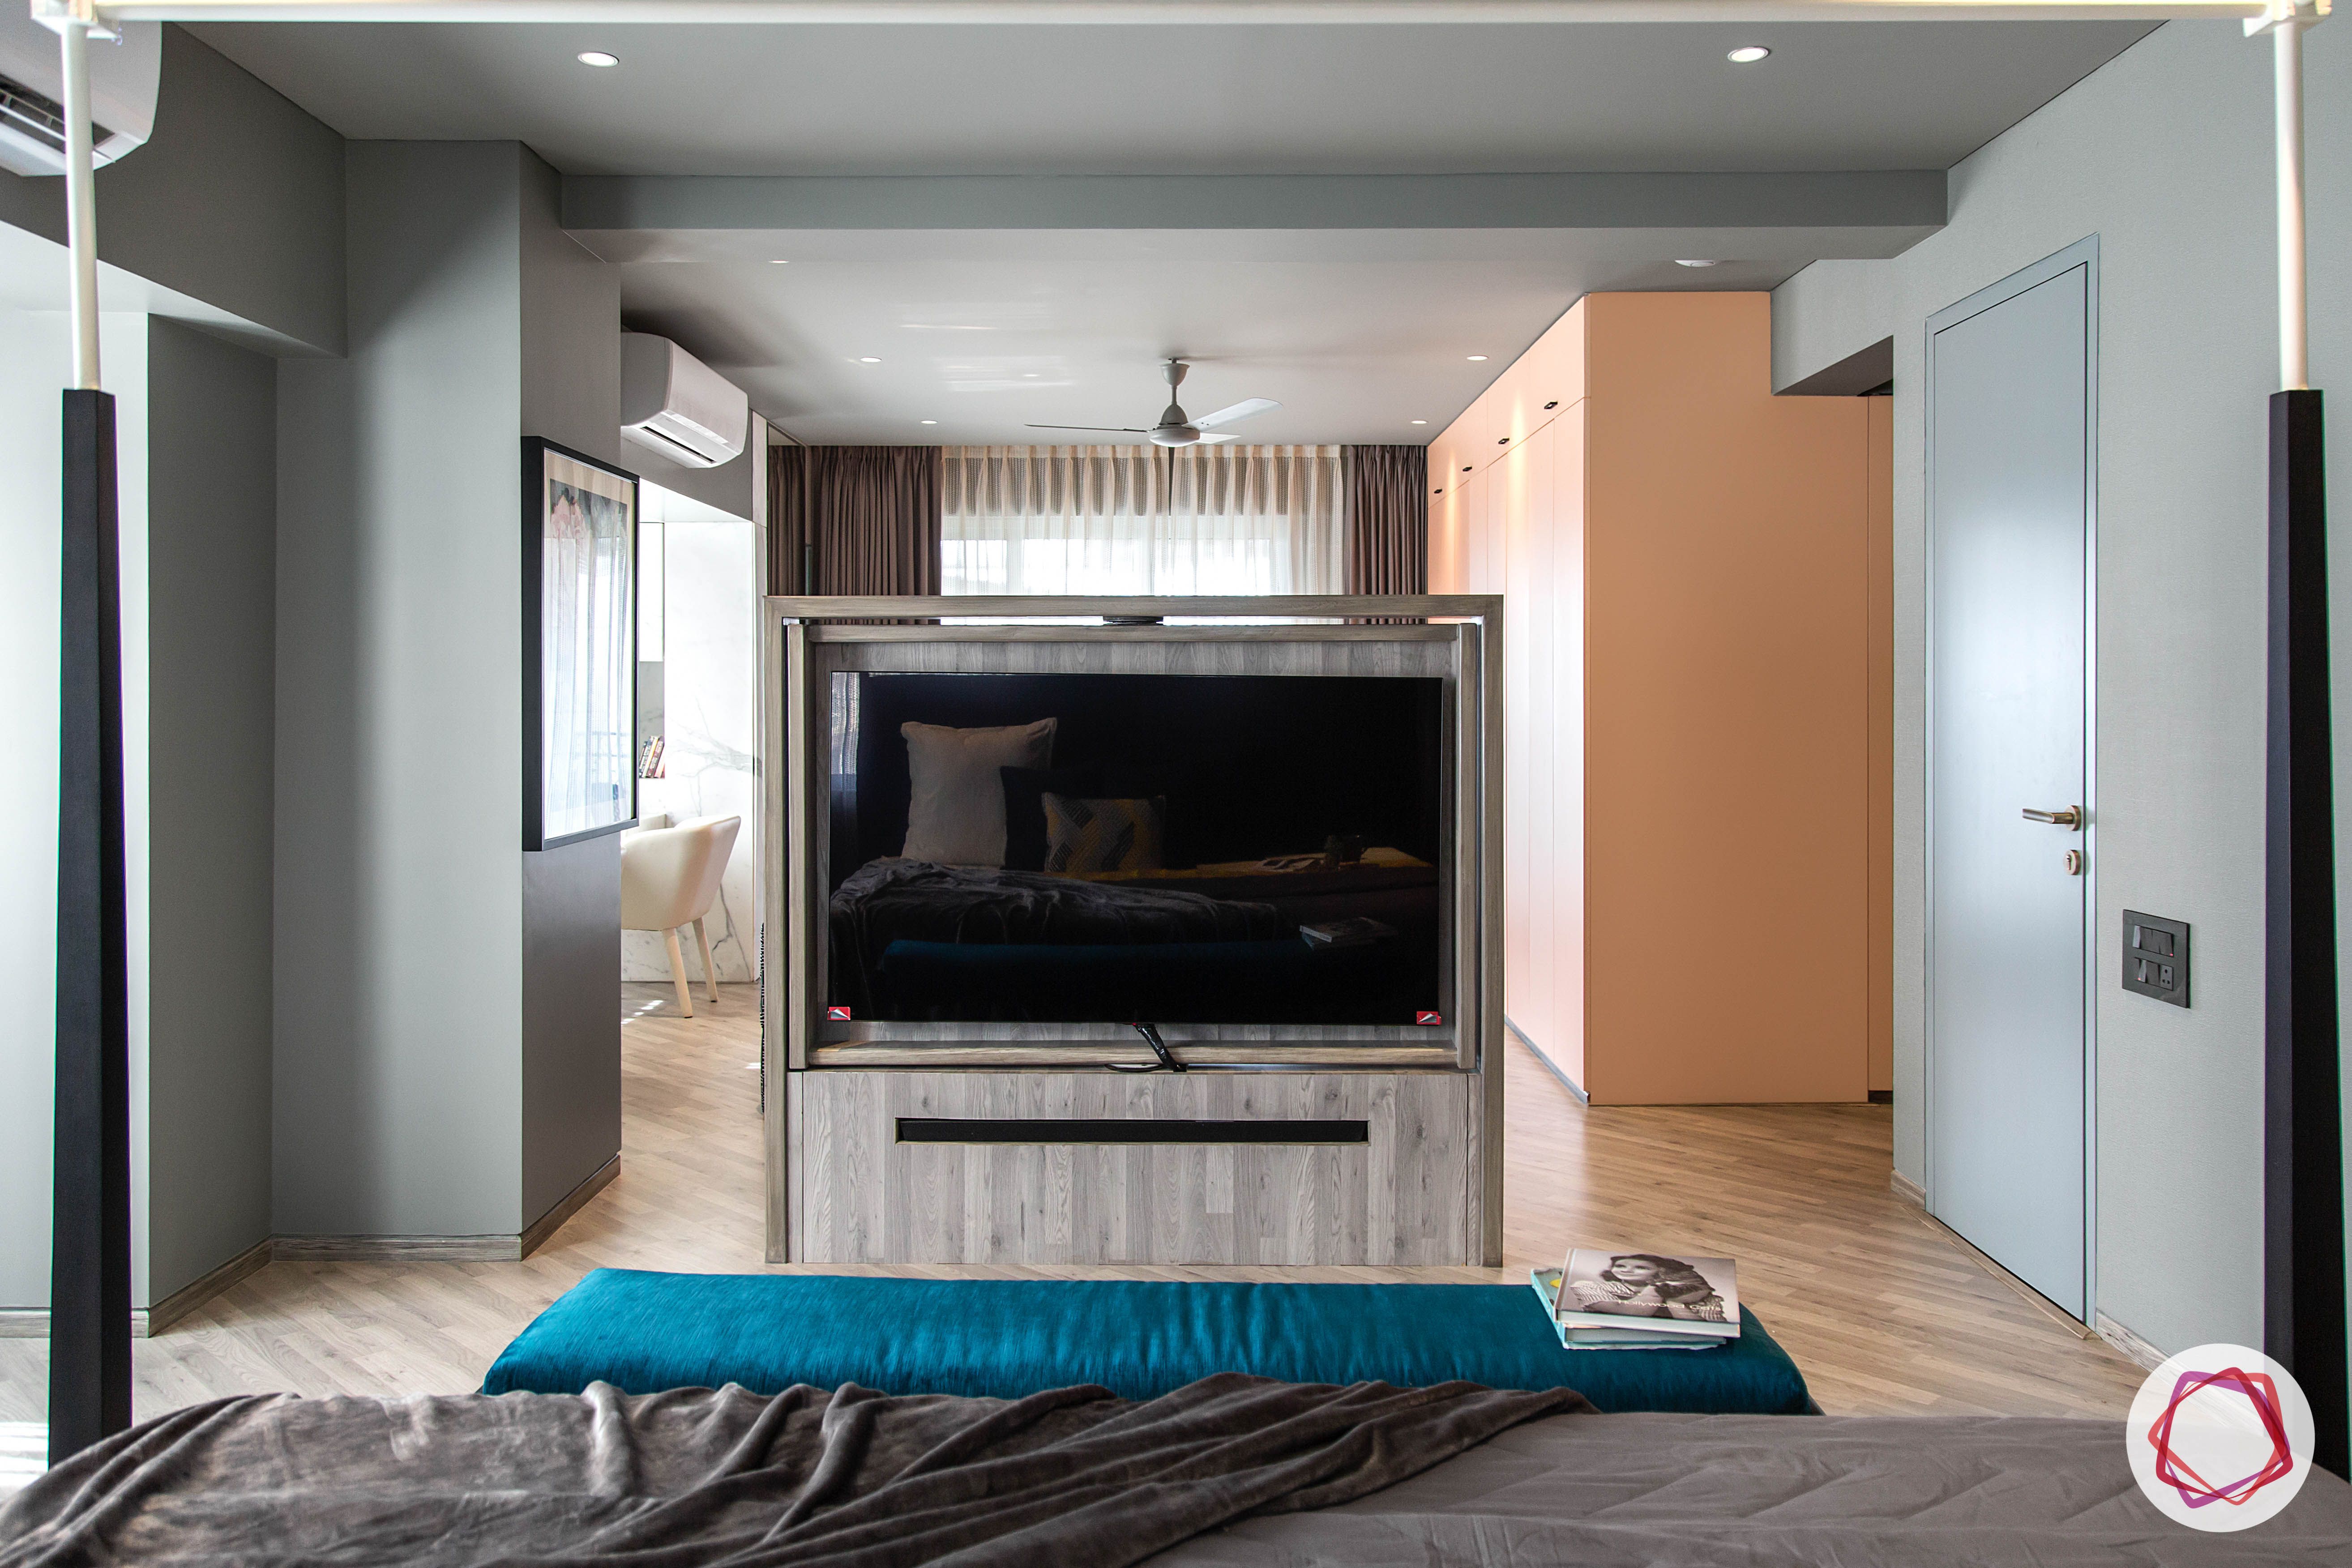 4bhk house plan-master bedroom designs-wooden flooring designs-bedroom tv cabinet-rotating tv-room partition designs